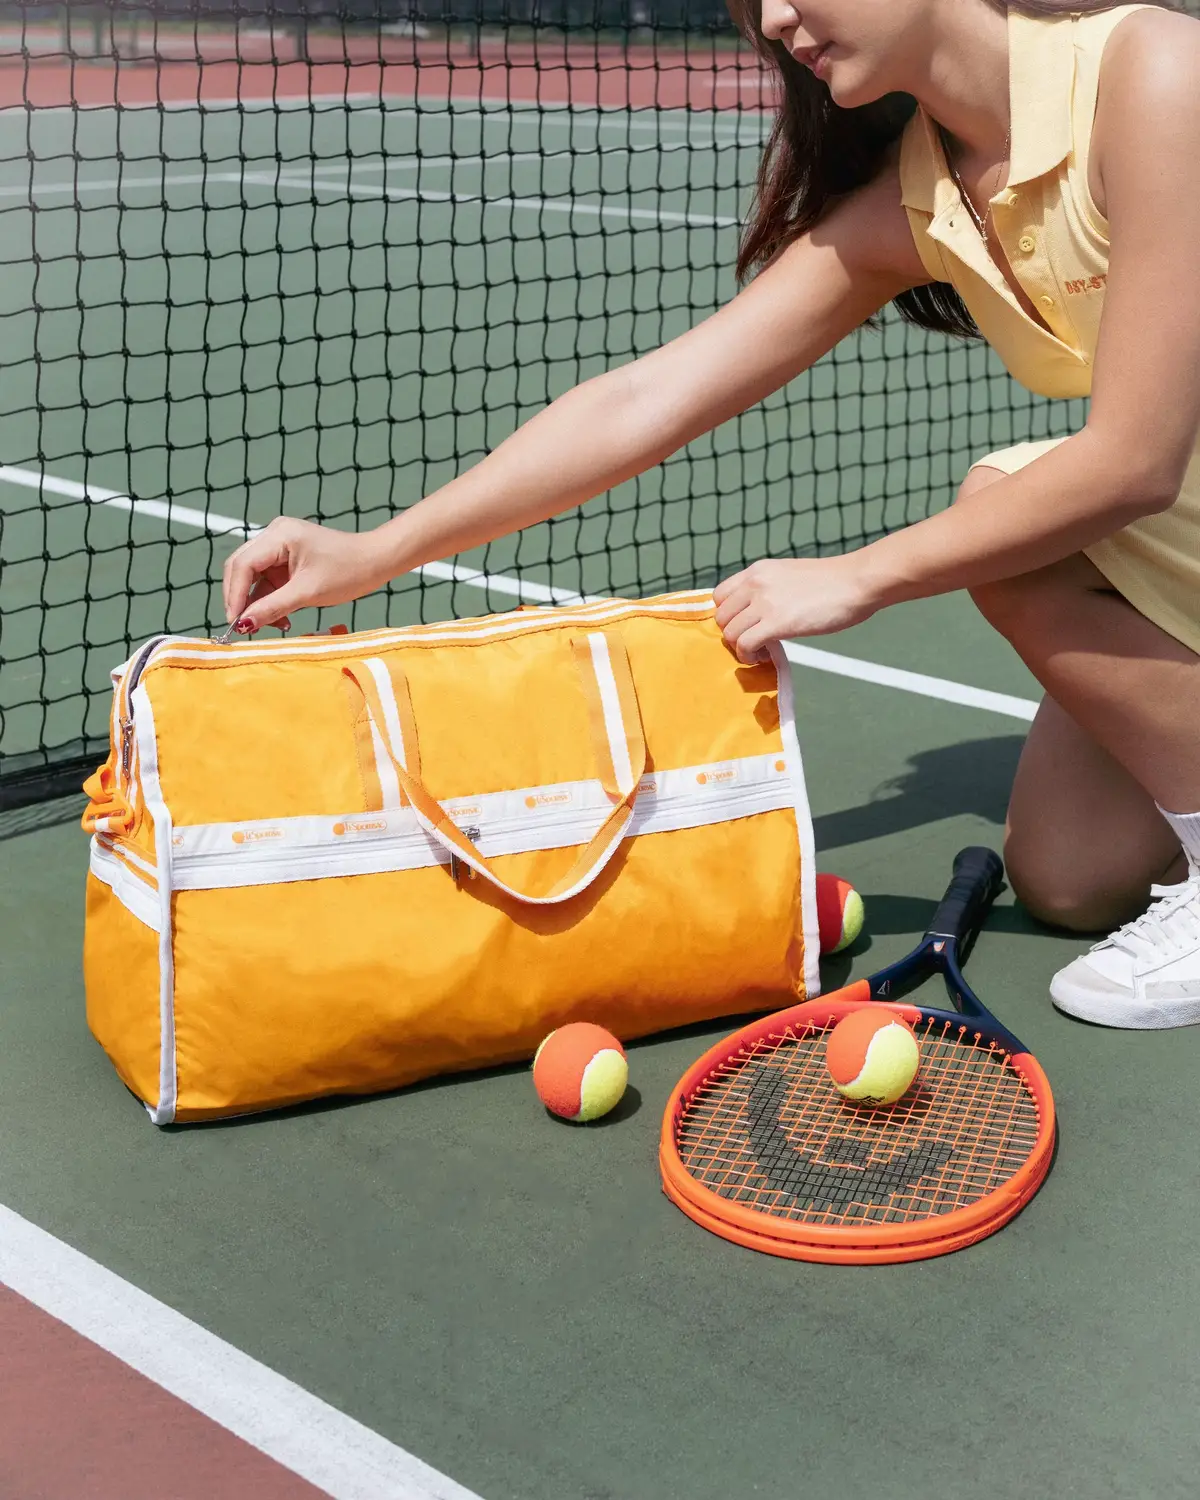 Peak tennis core 🎾☁️.  Matching tennis bags and fits. #challengers #challengersthemovie #tennis #tennisaesthetic #lesportsac #tenniscore